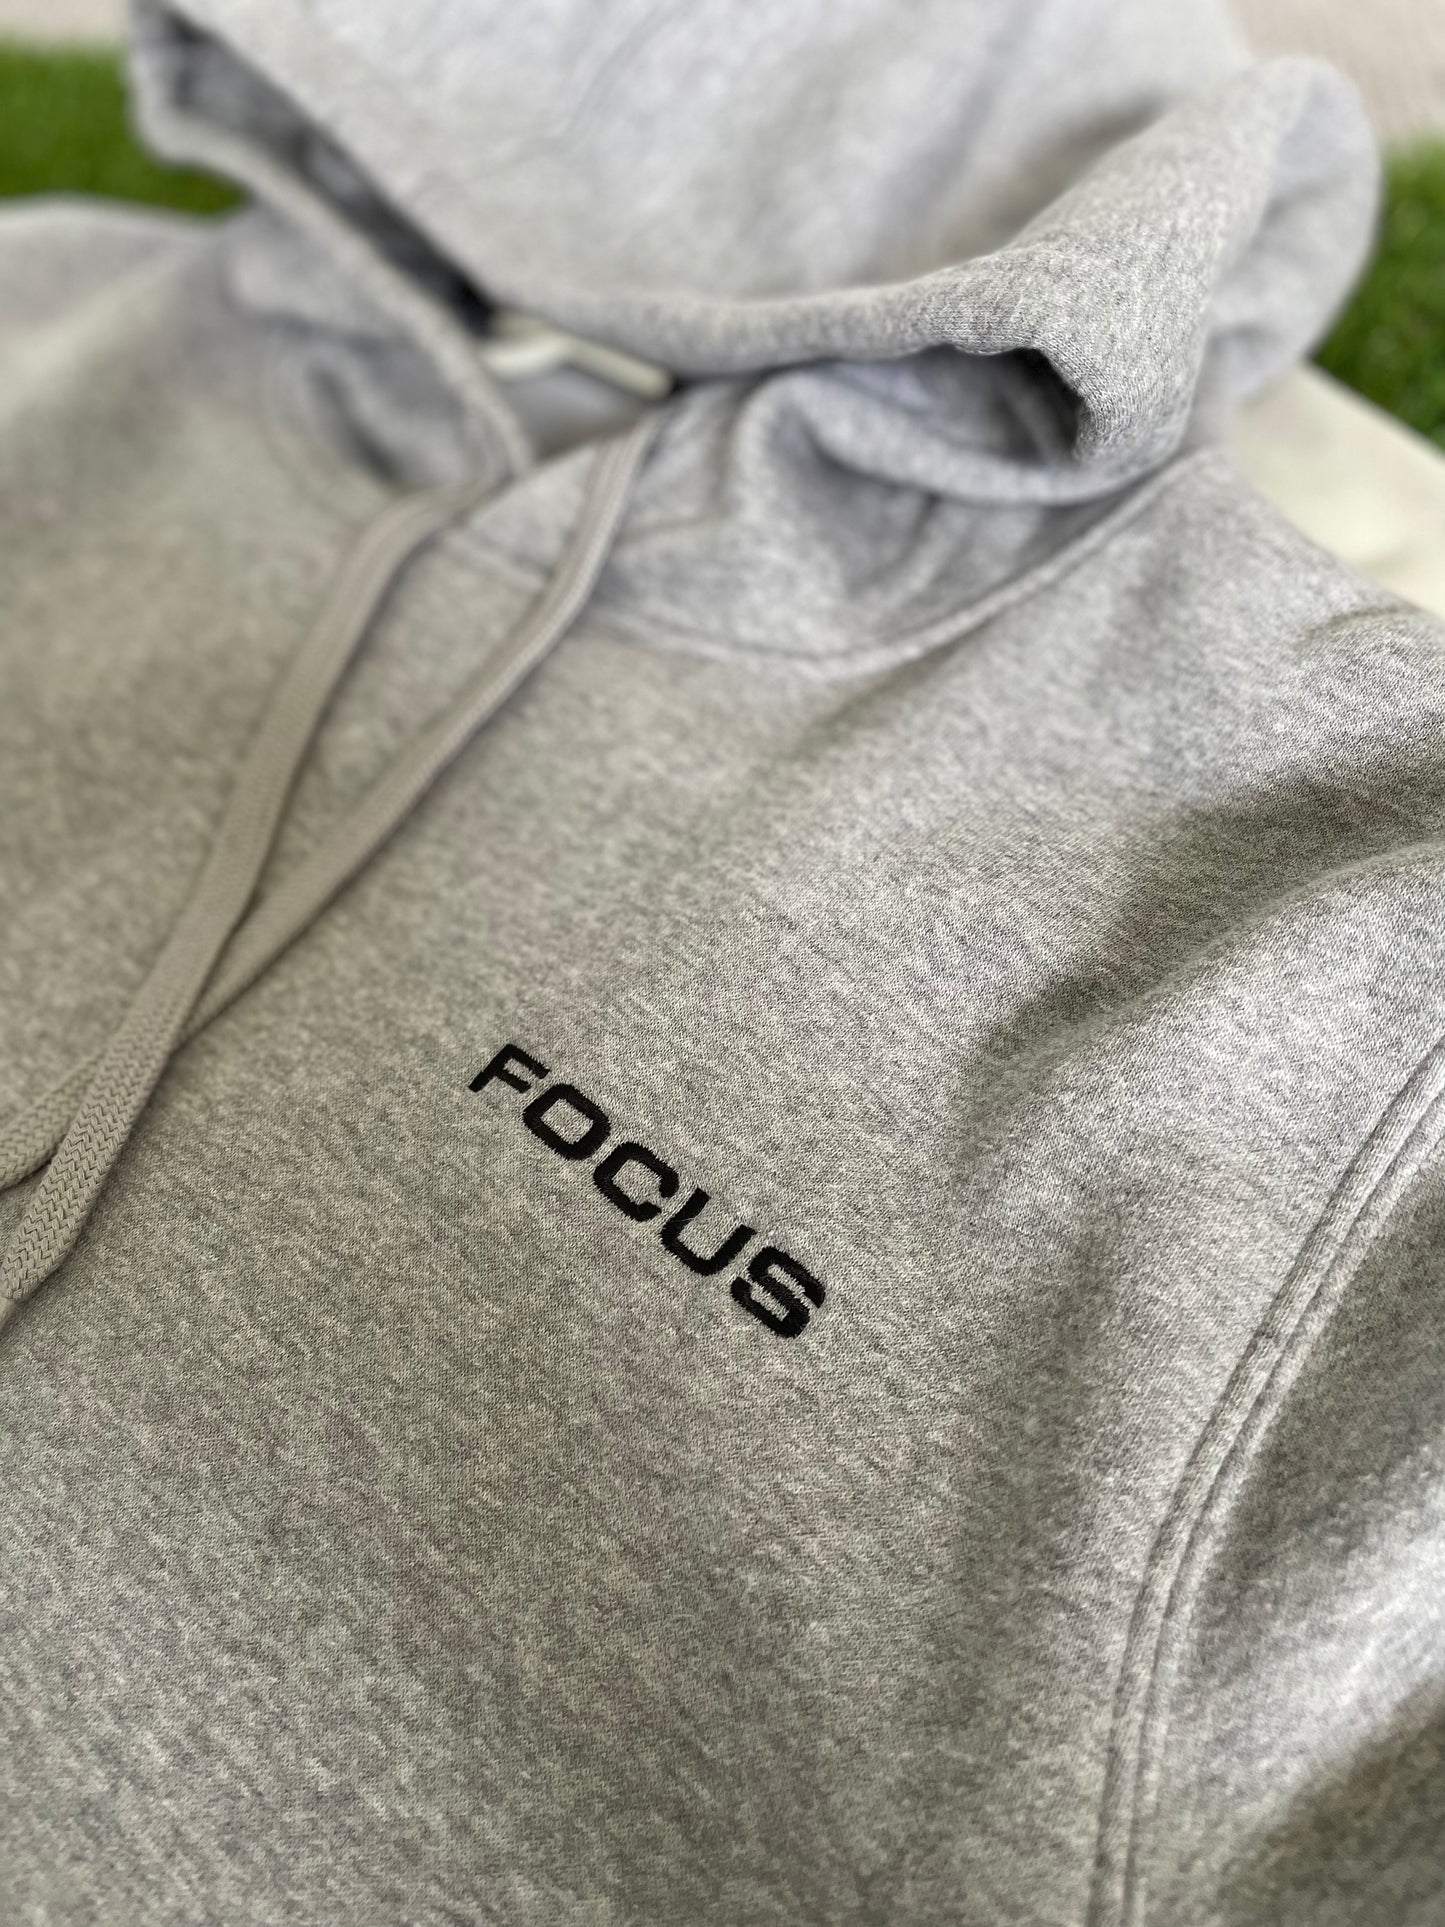 Focus Originals Leisure Wear - Fitted Hoodies